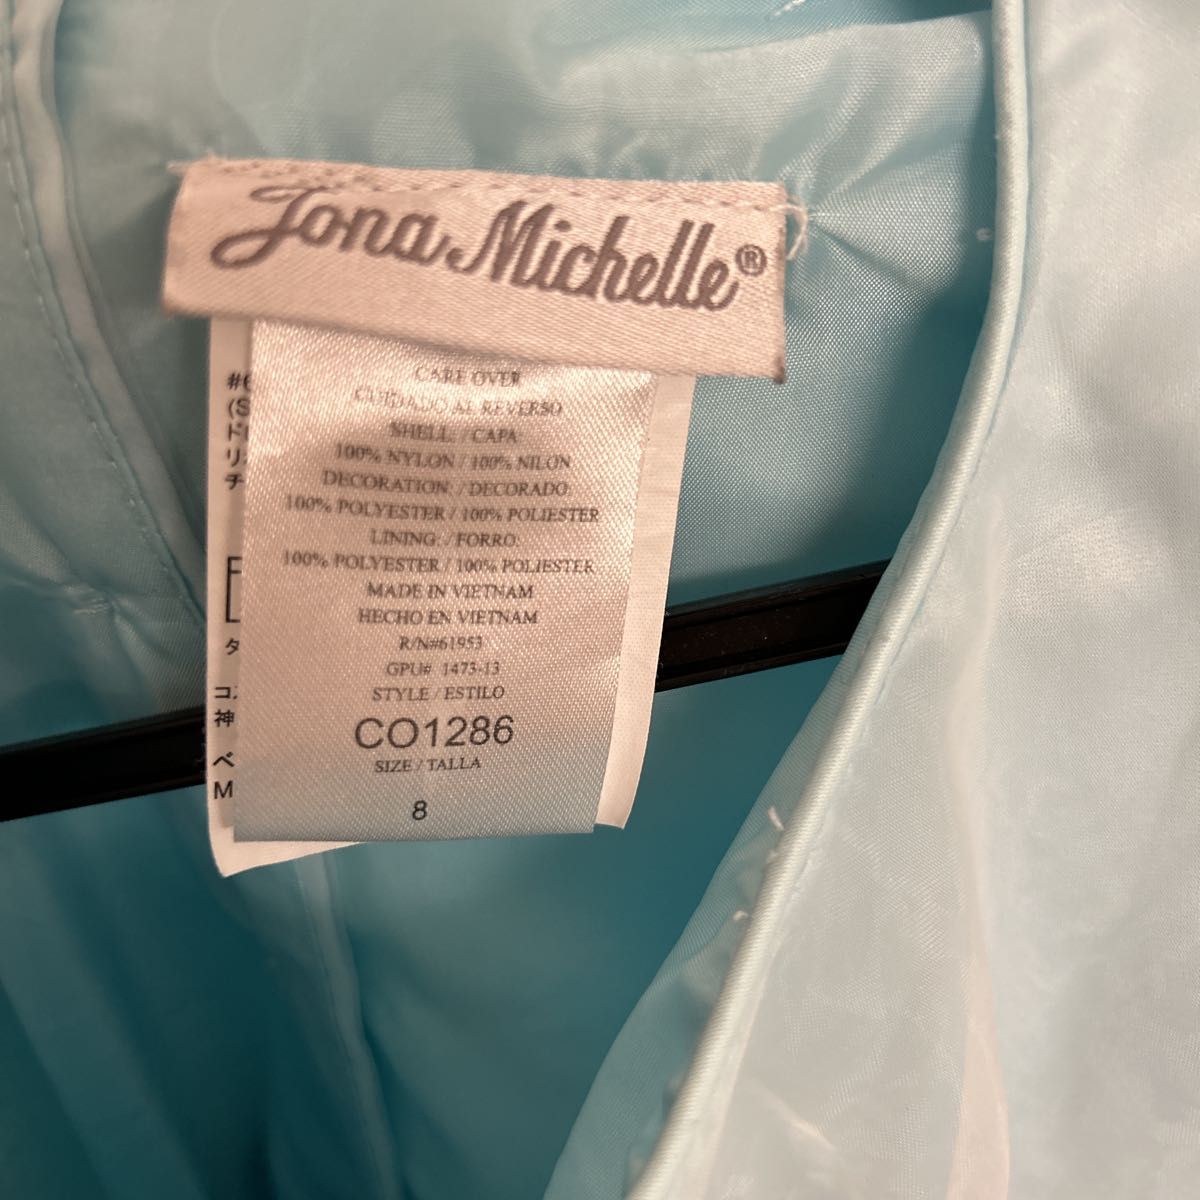 Jona Michelle 美品 size8 ロングドレス 刺繍 オーガンジー